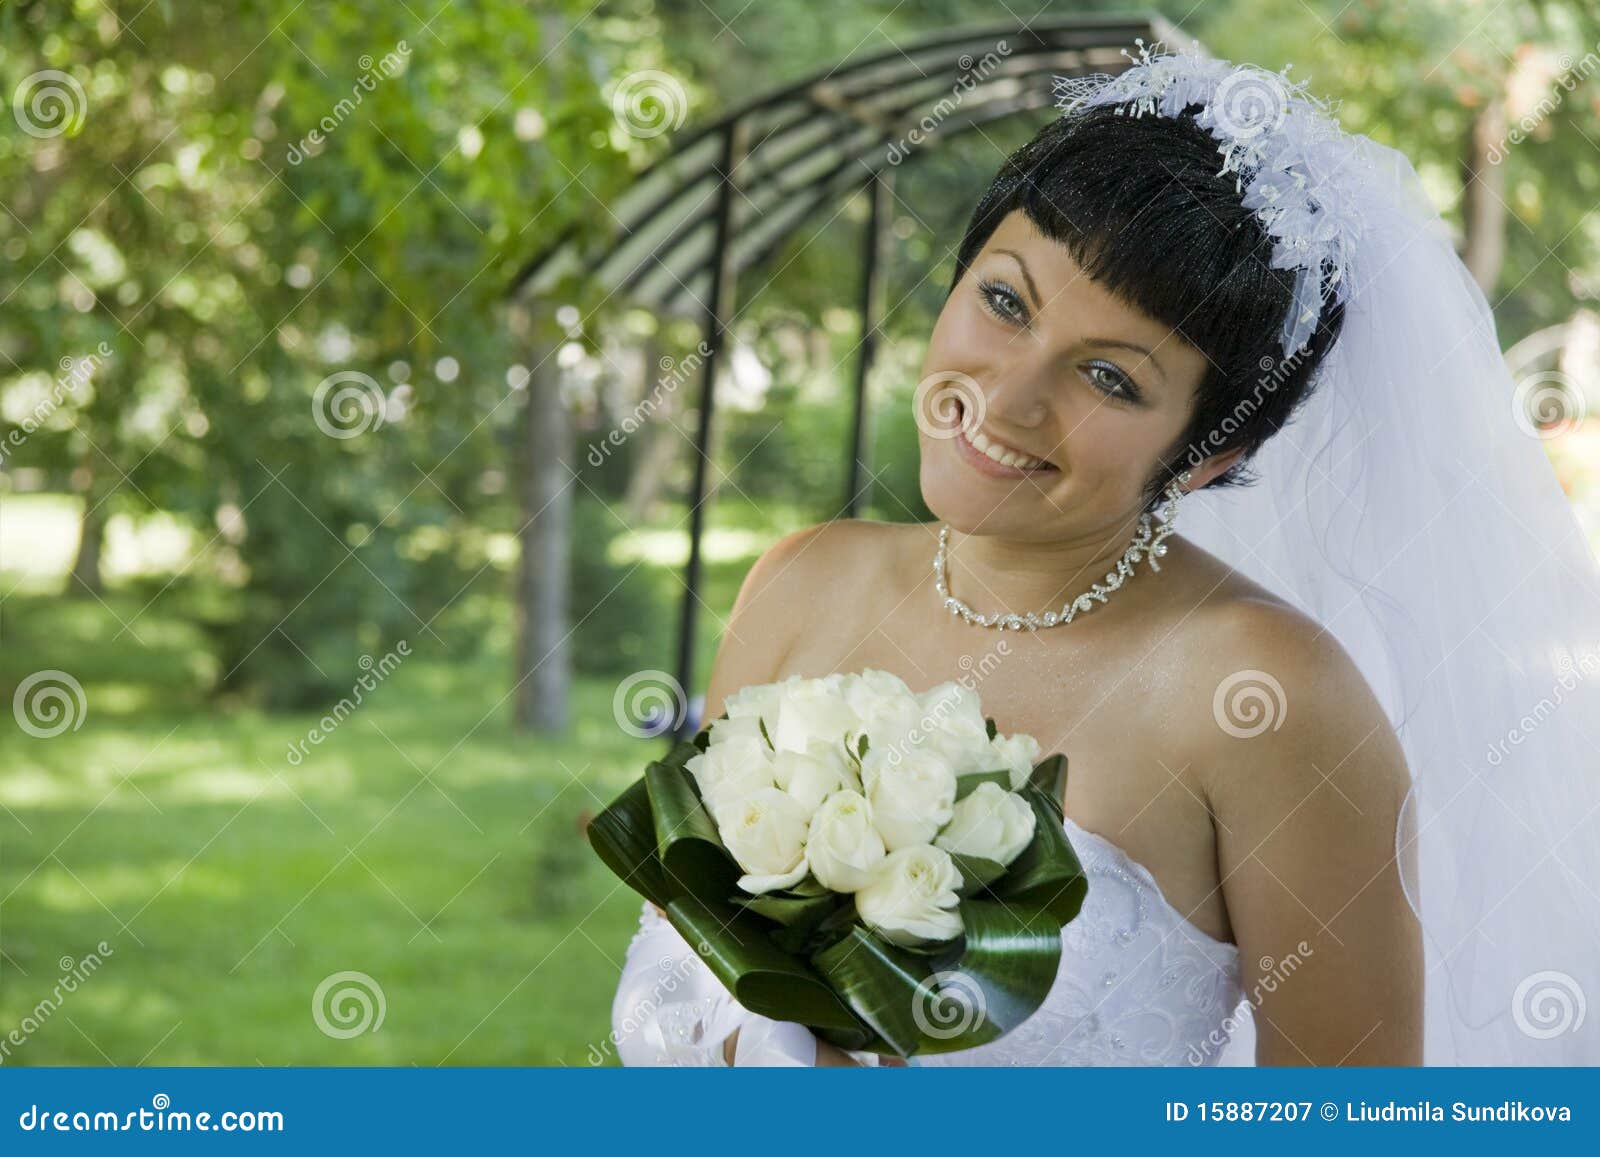 One happy bride stock image. Image of caucasian, bride - 15887207